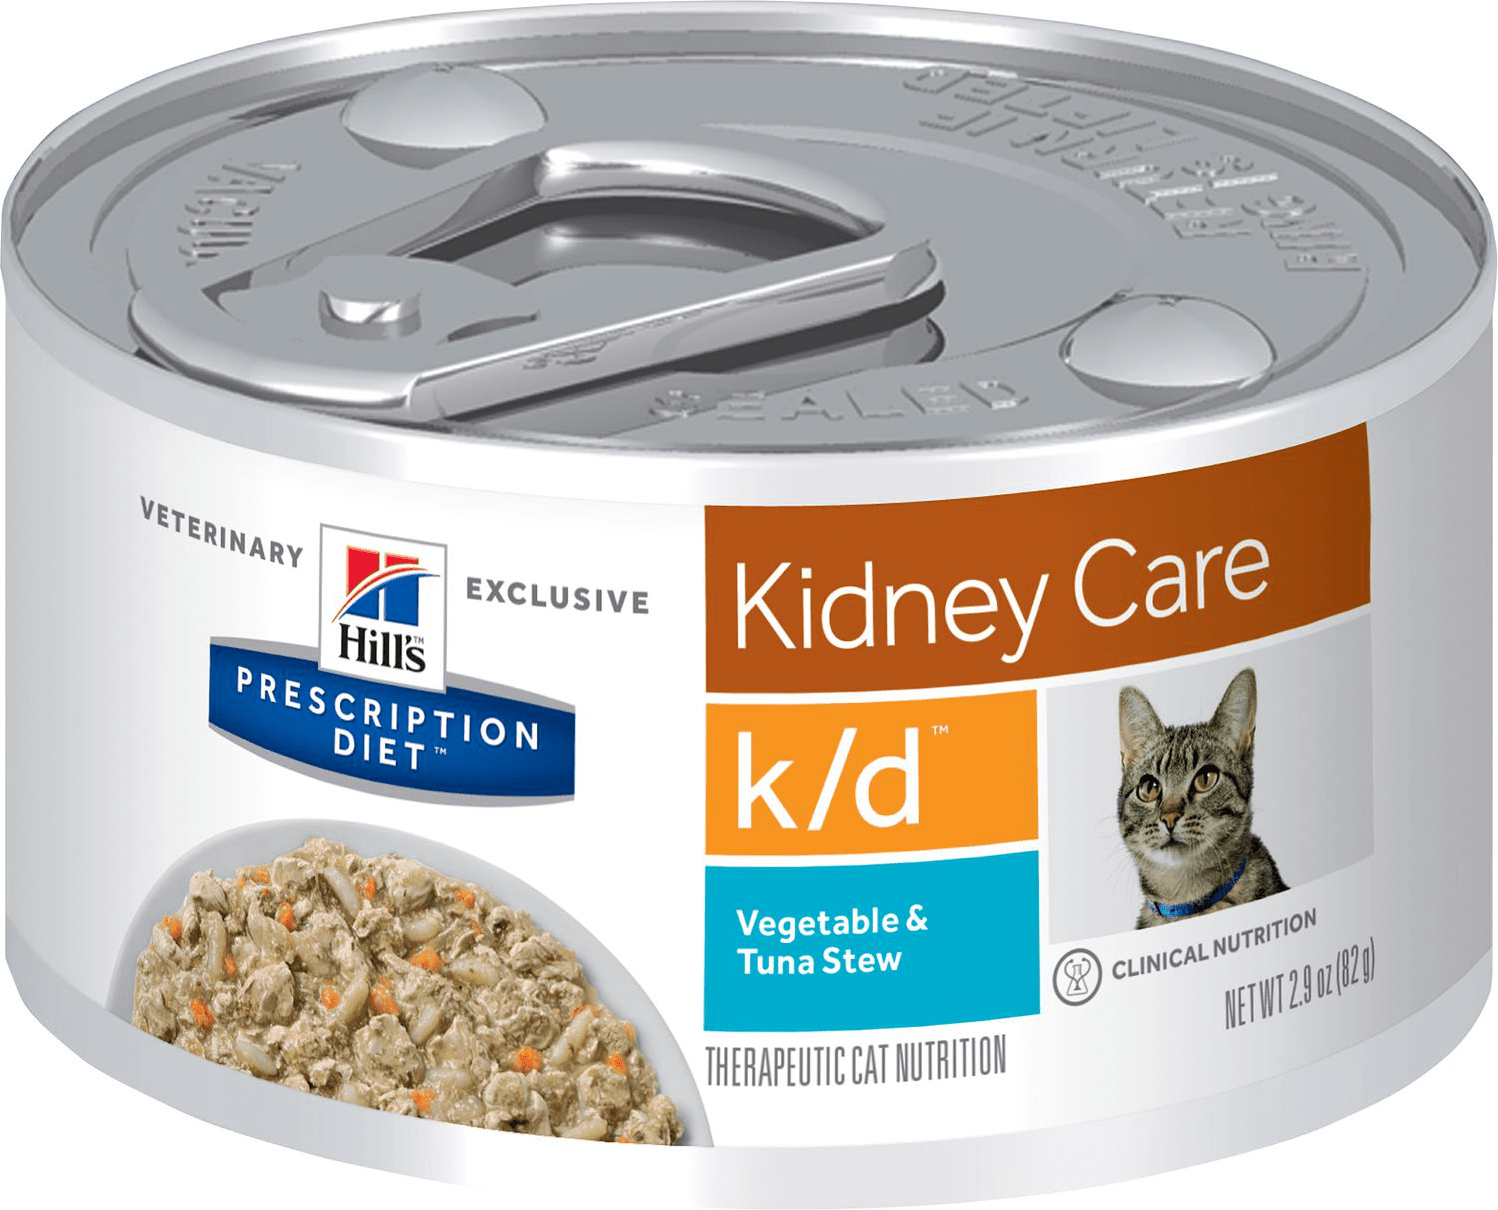 Hill's Prescription Diet K-d Vegetable & Tuna Stew